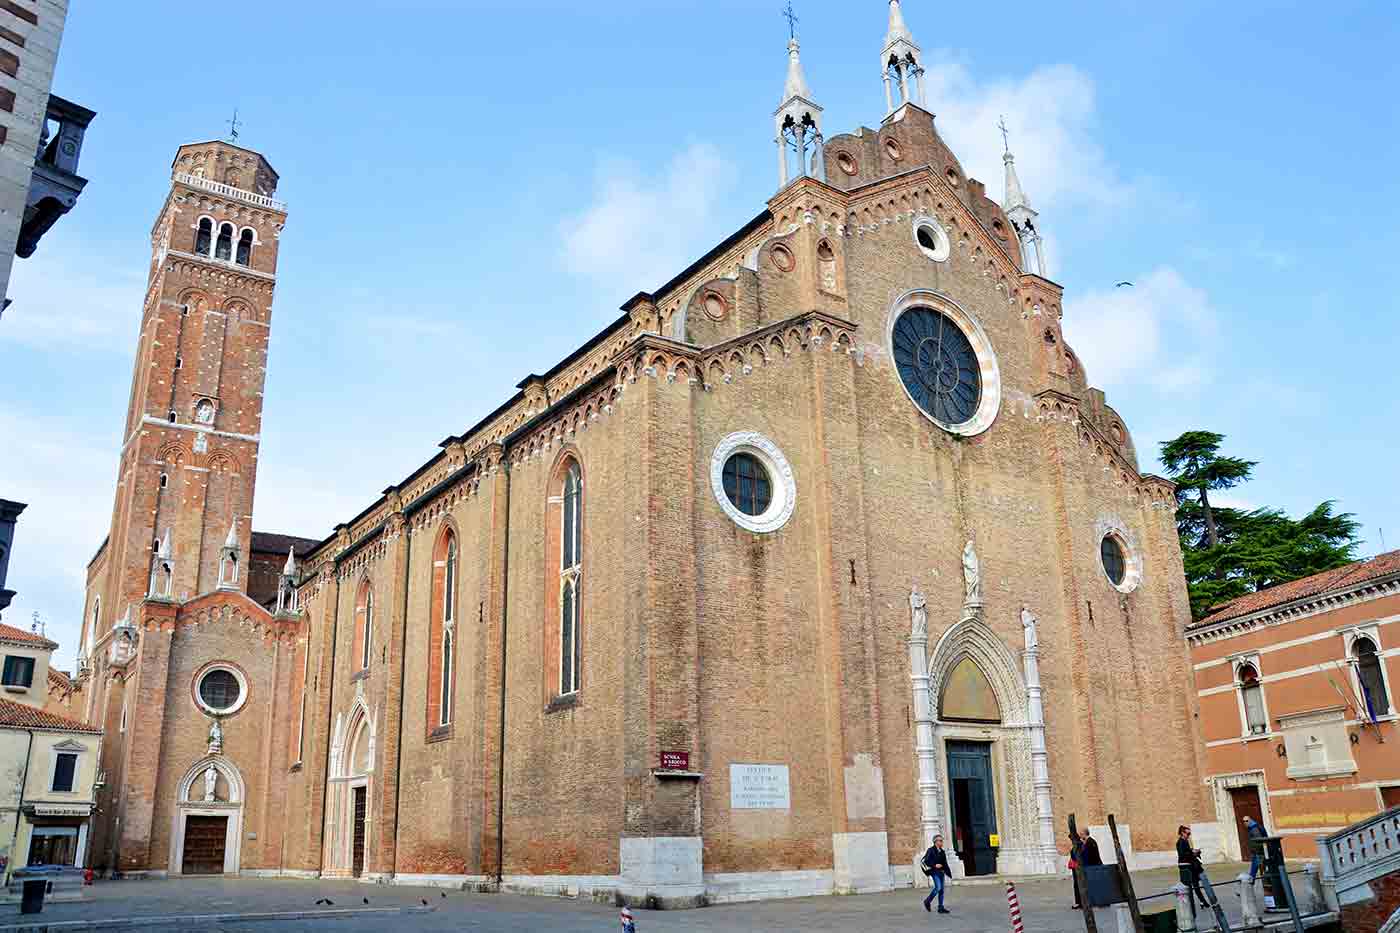 Basilica di Santa Maria Gloriosa dei Frari